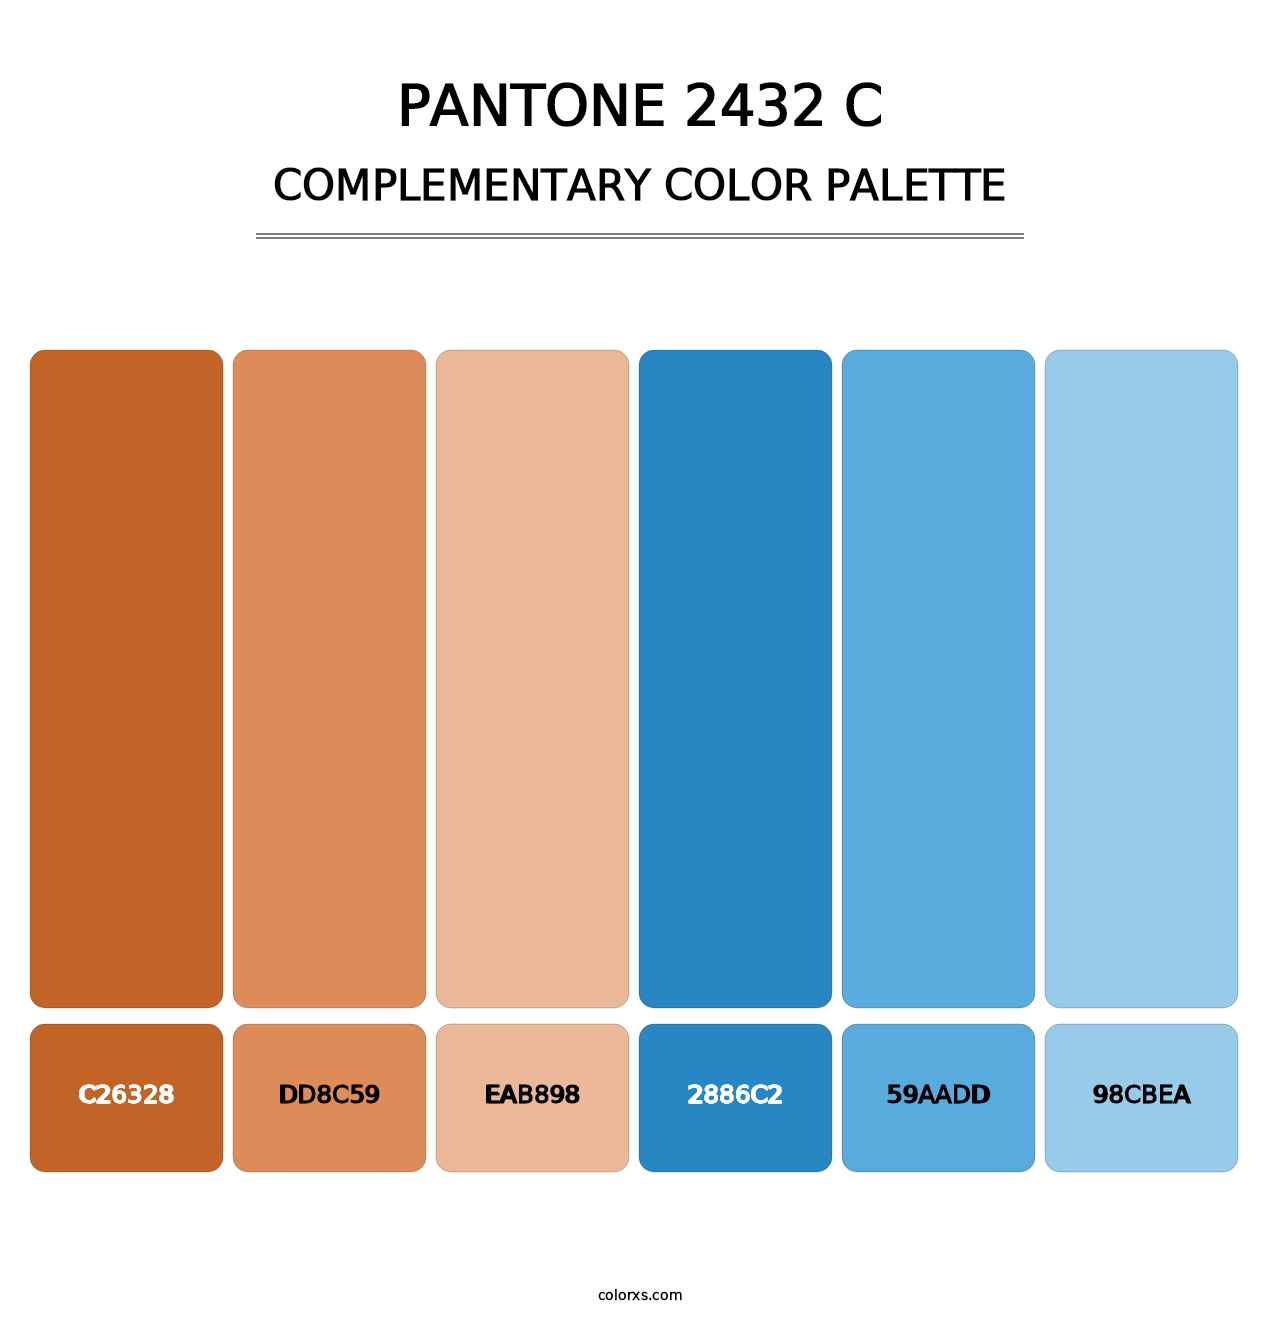 PANTONE 2432 C - Complementary Color Palette